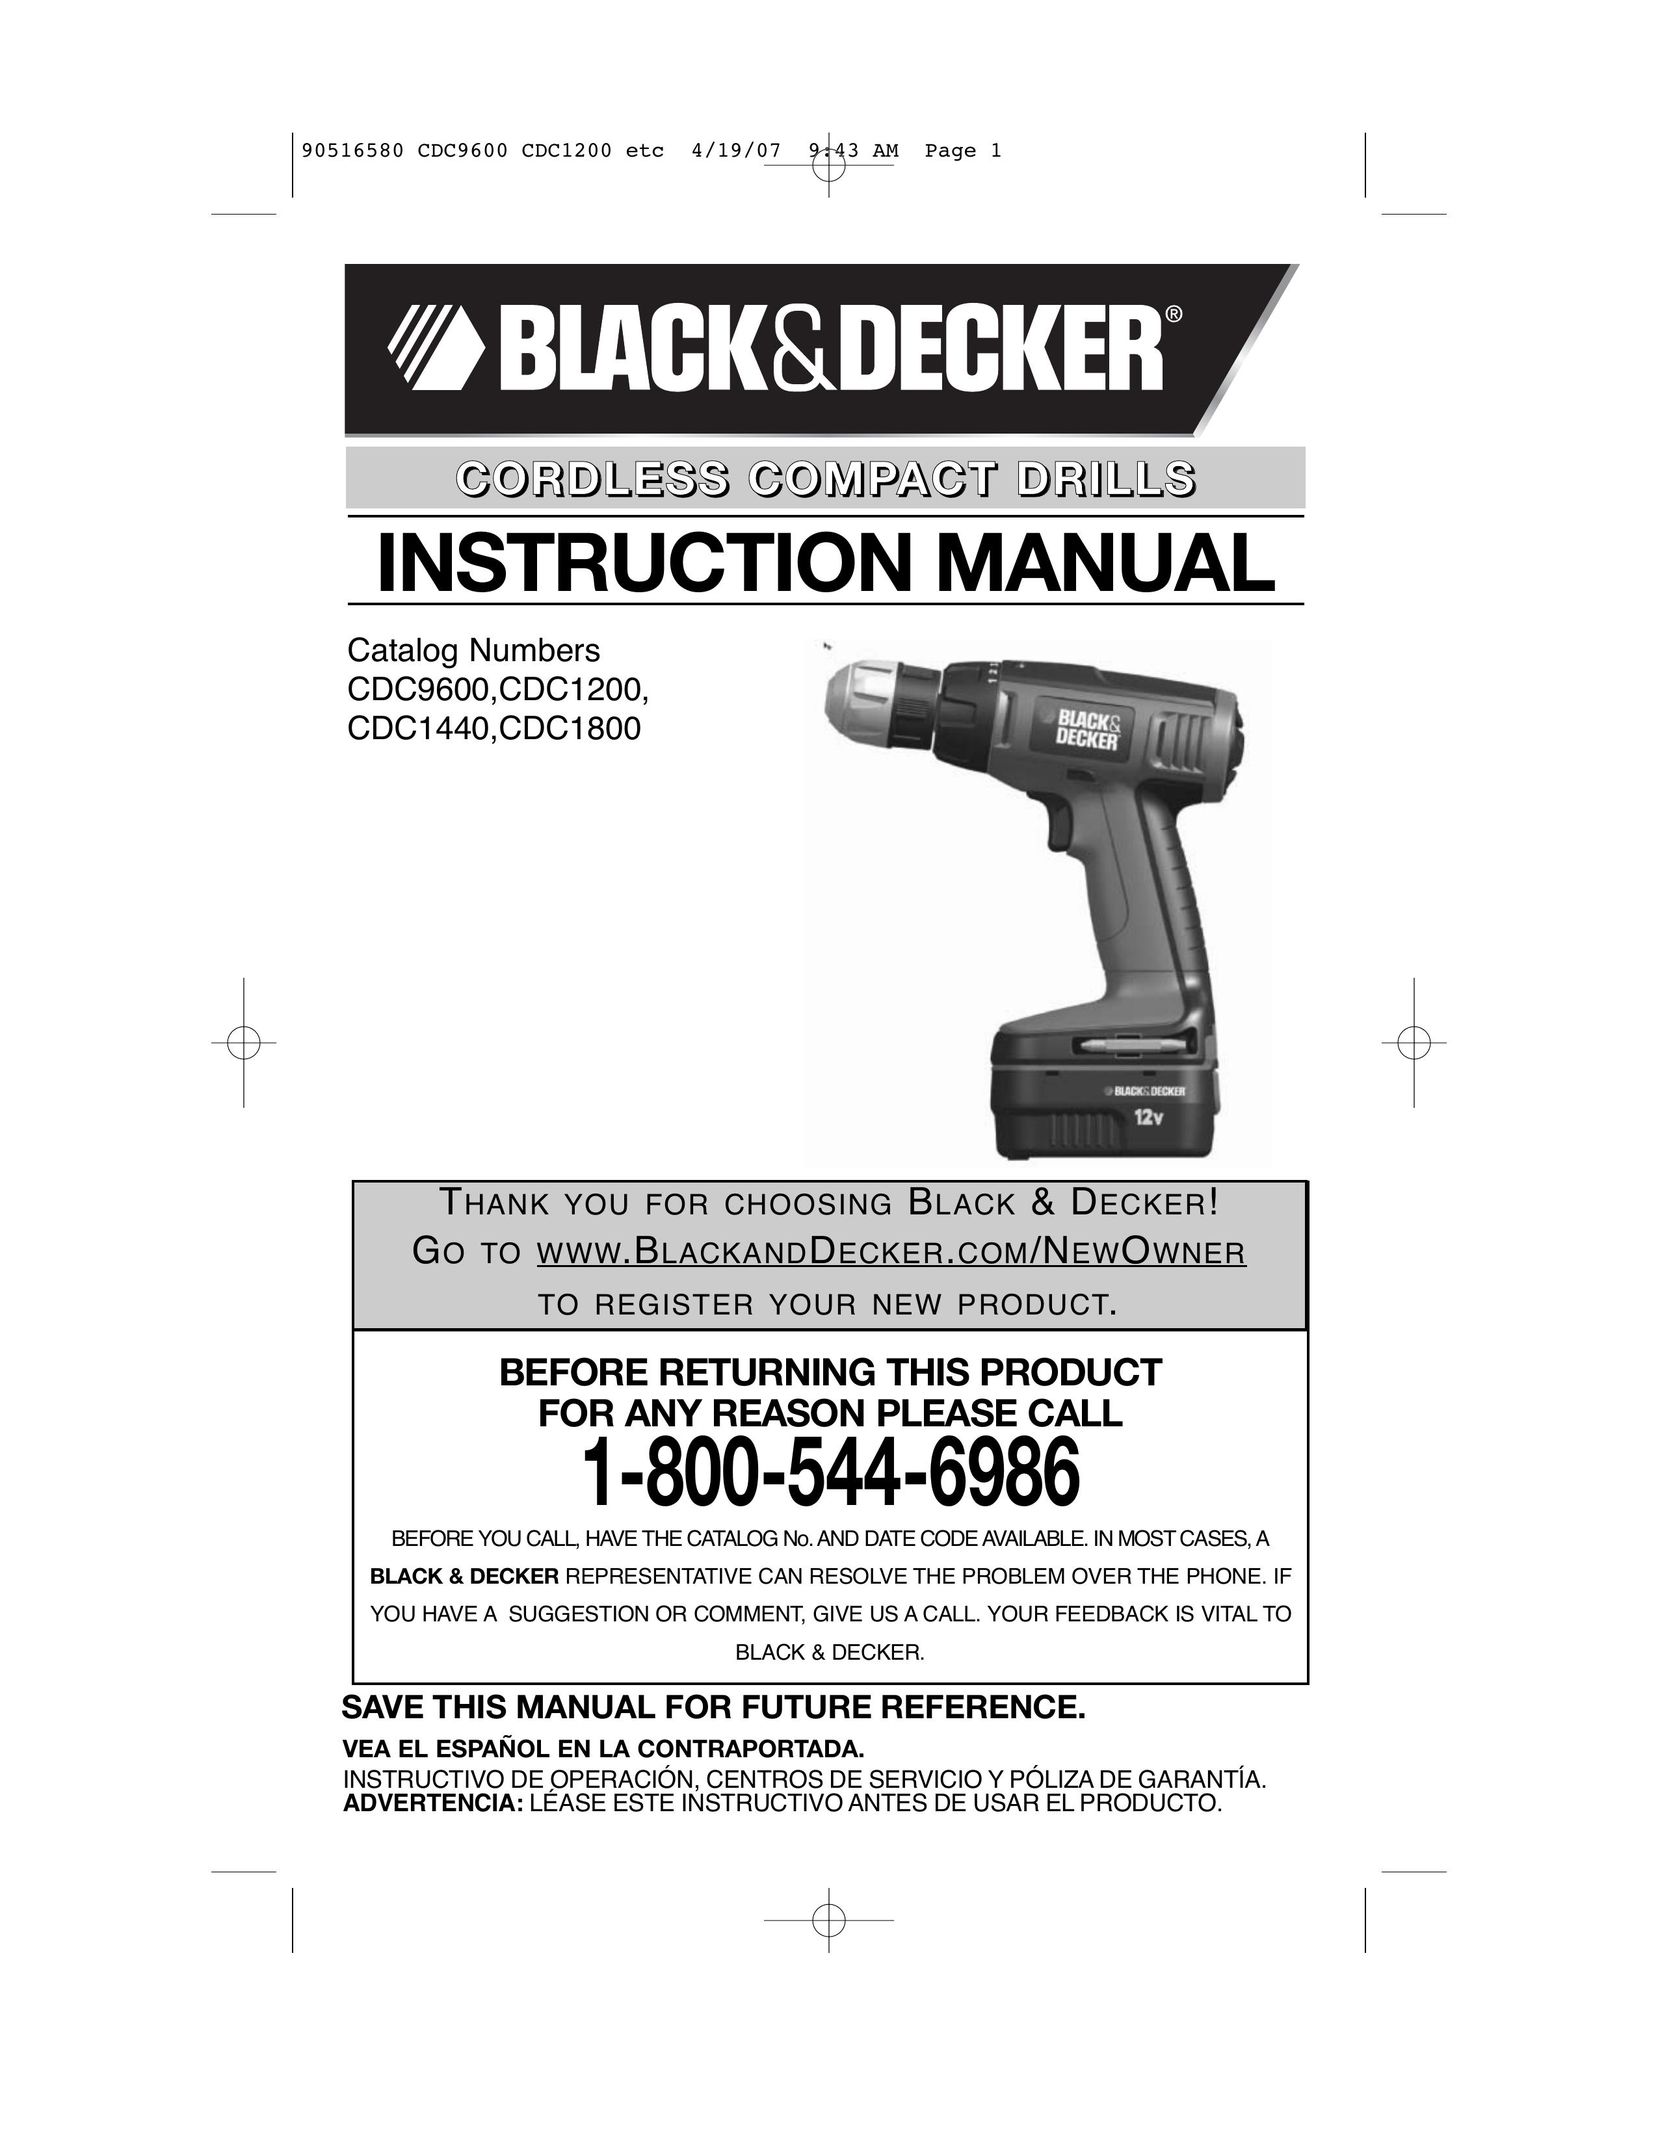 Black & Decker 90516580 Cordless Drill User Manual